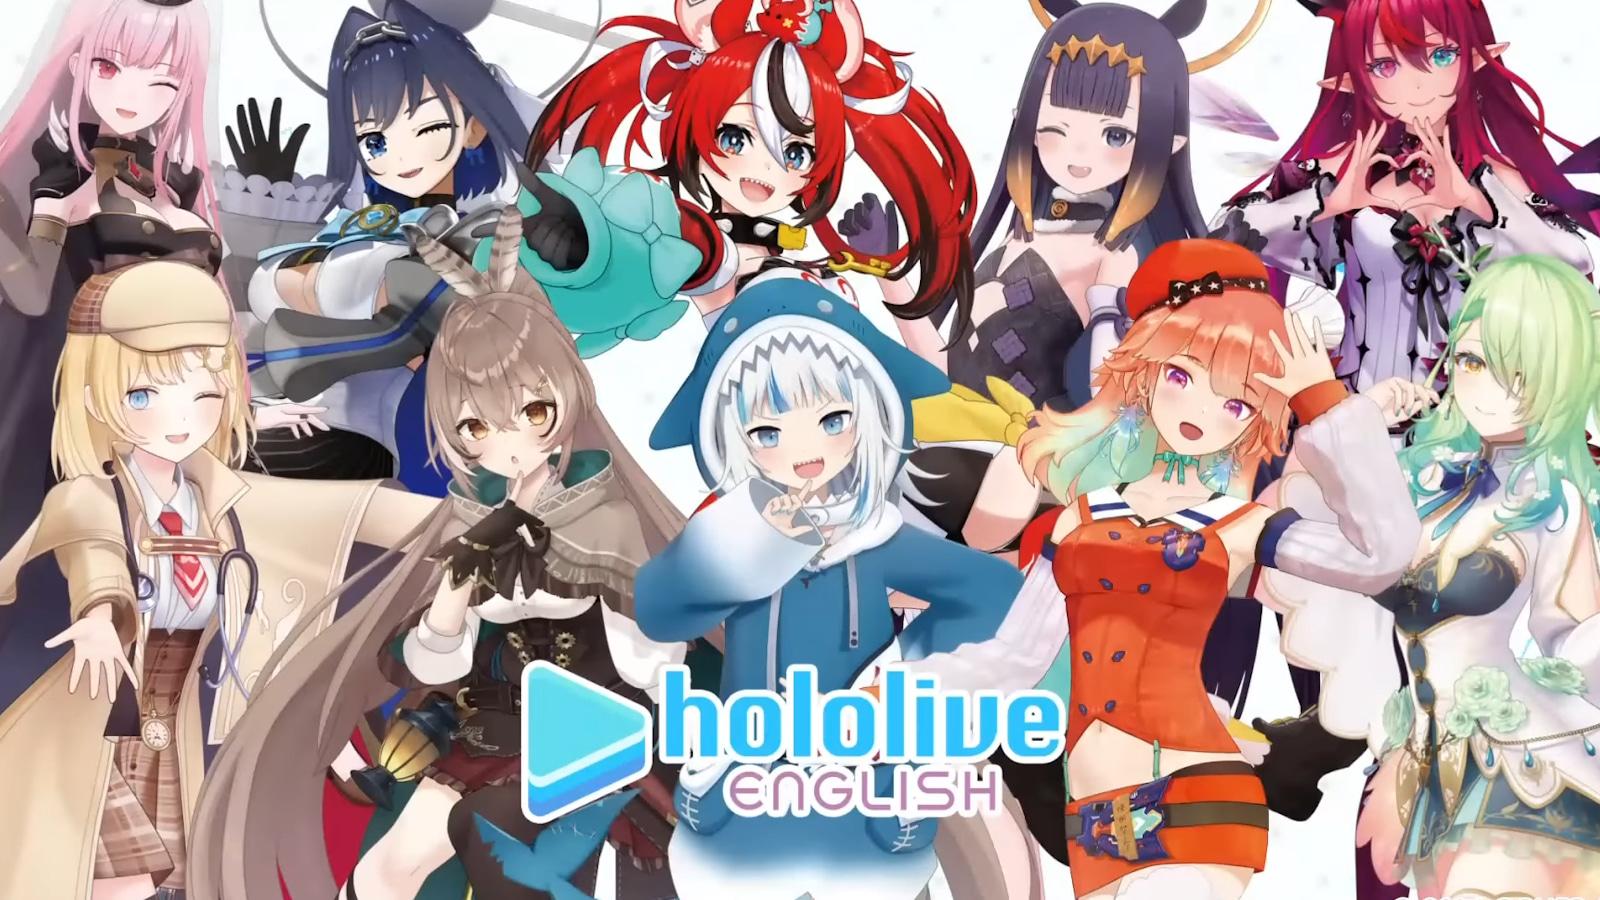 all ten hololive En talents posing behind logo in trailer for gen 3 auditions.